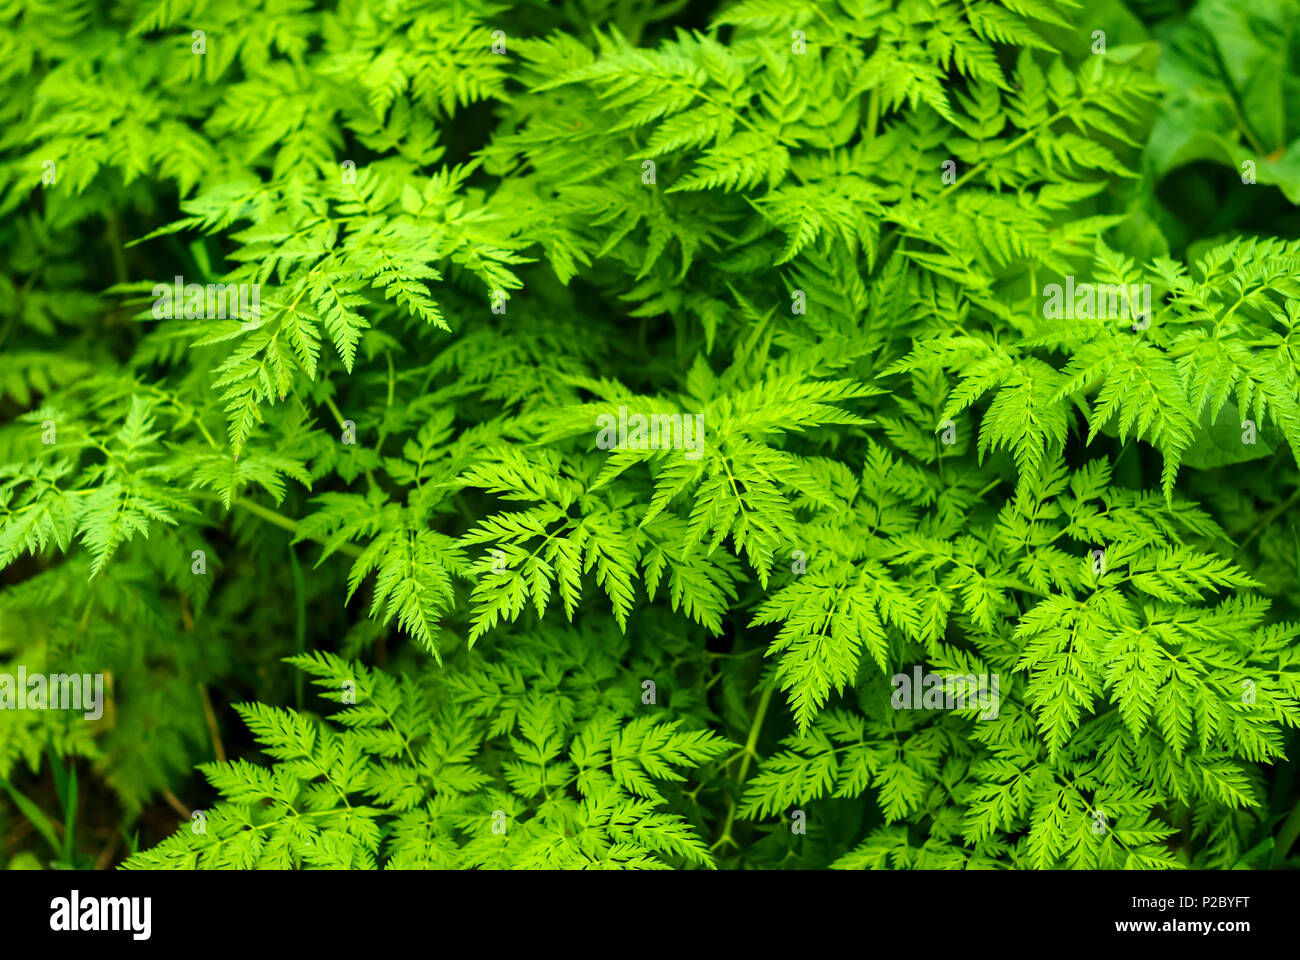 floral background - green leaves of сhaerophyllum (parsnip chervil) Stock Photo